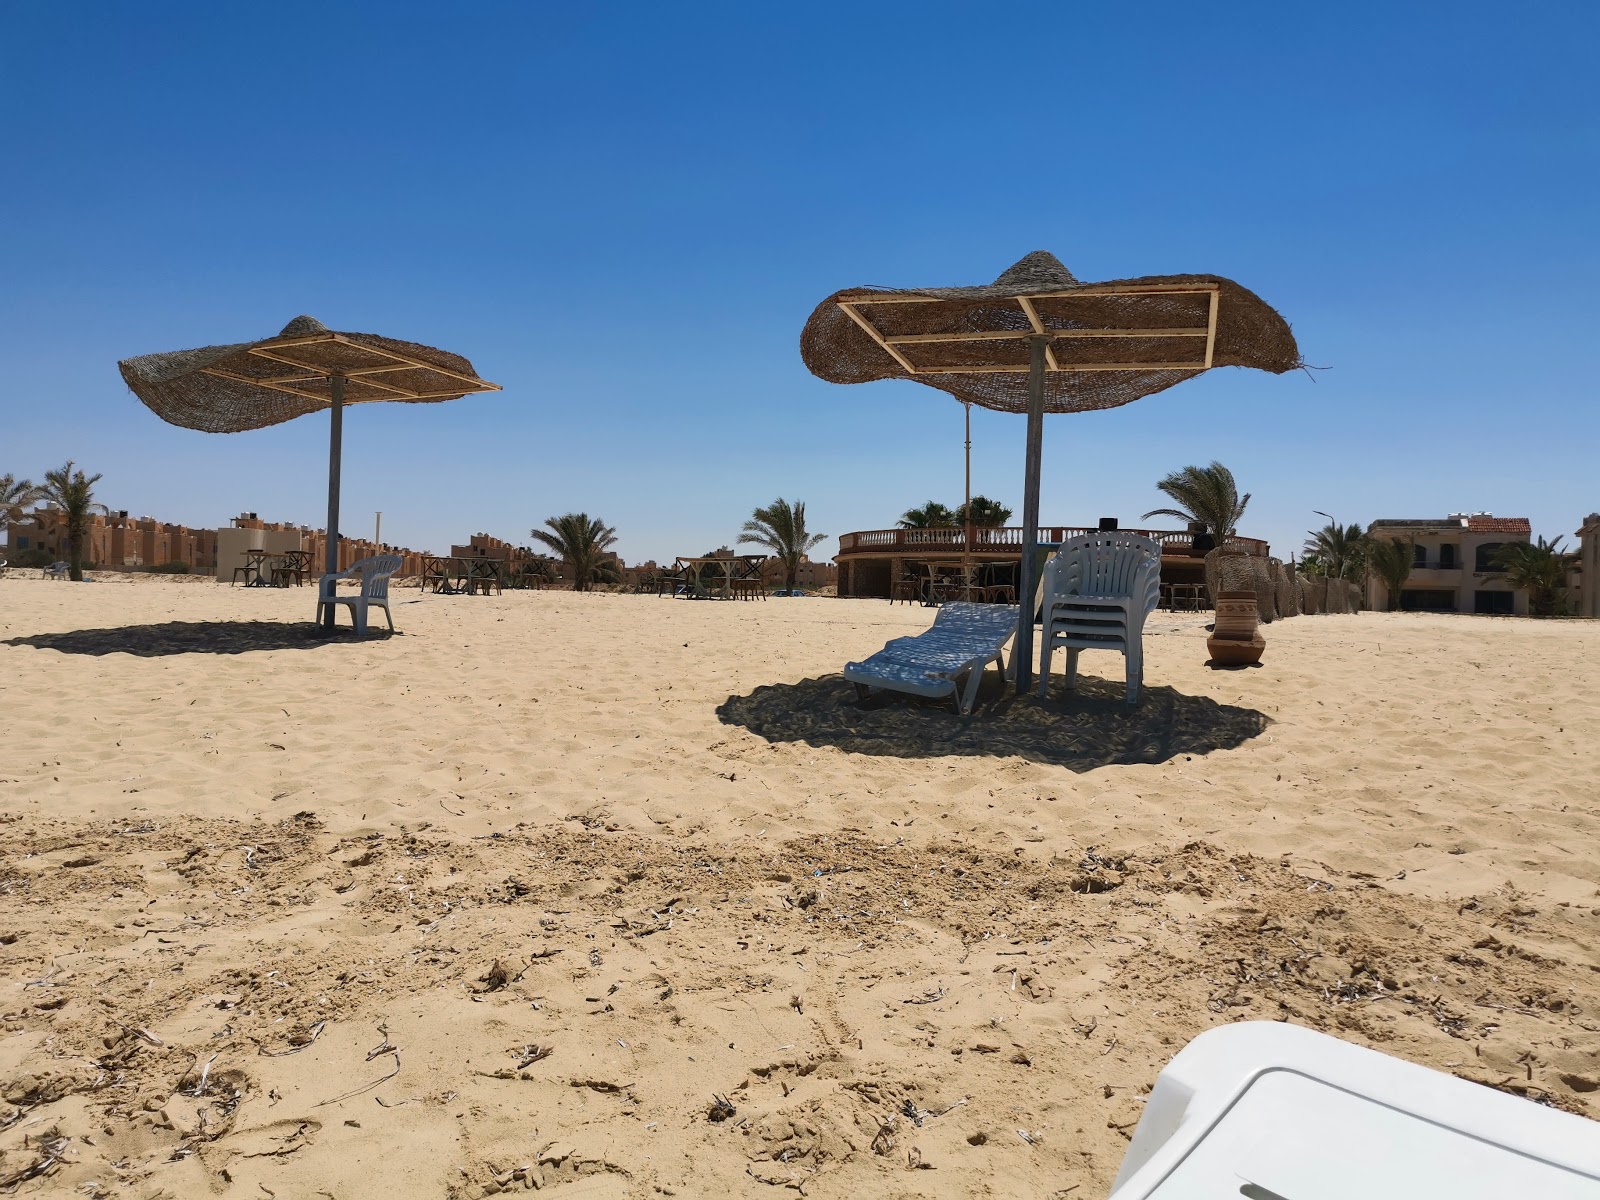 Foto de Santa Monika Beach - lugar popular entre os apreciadores de relaxamento